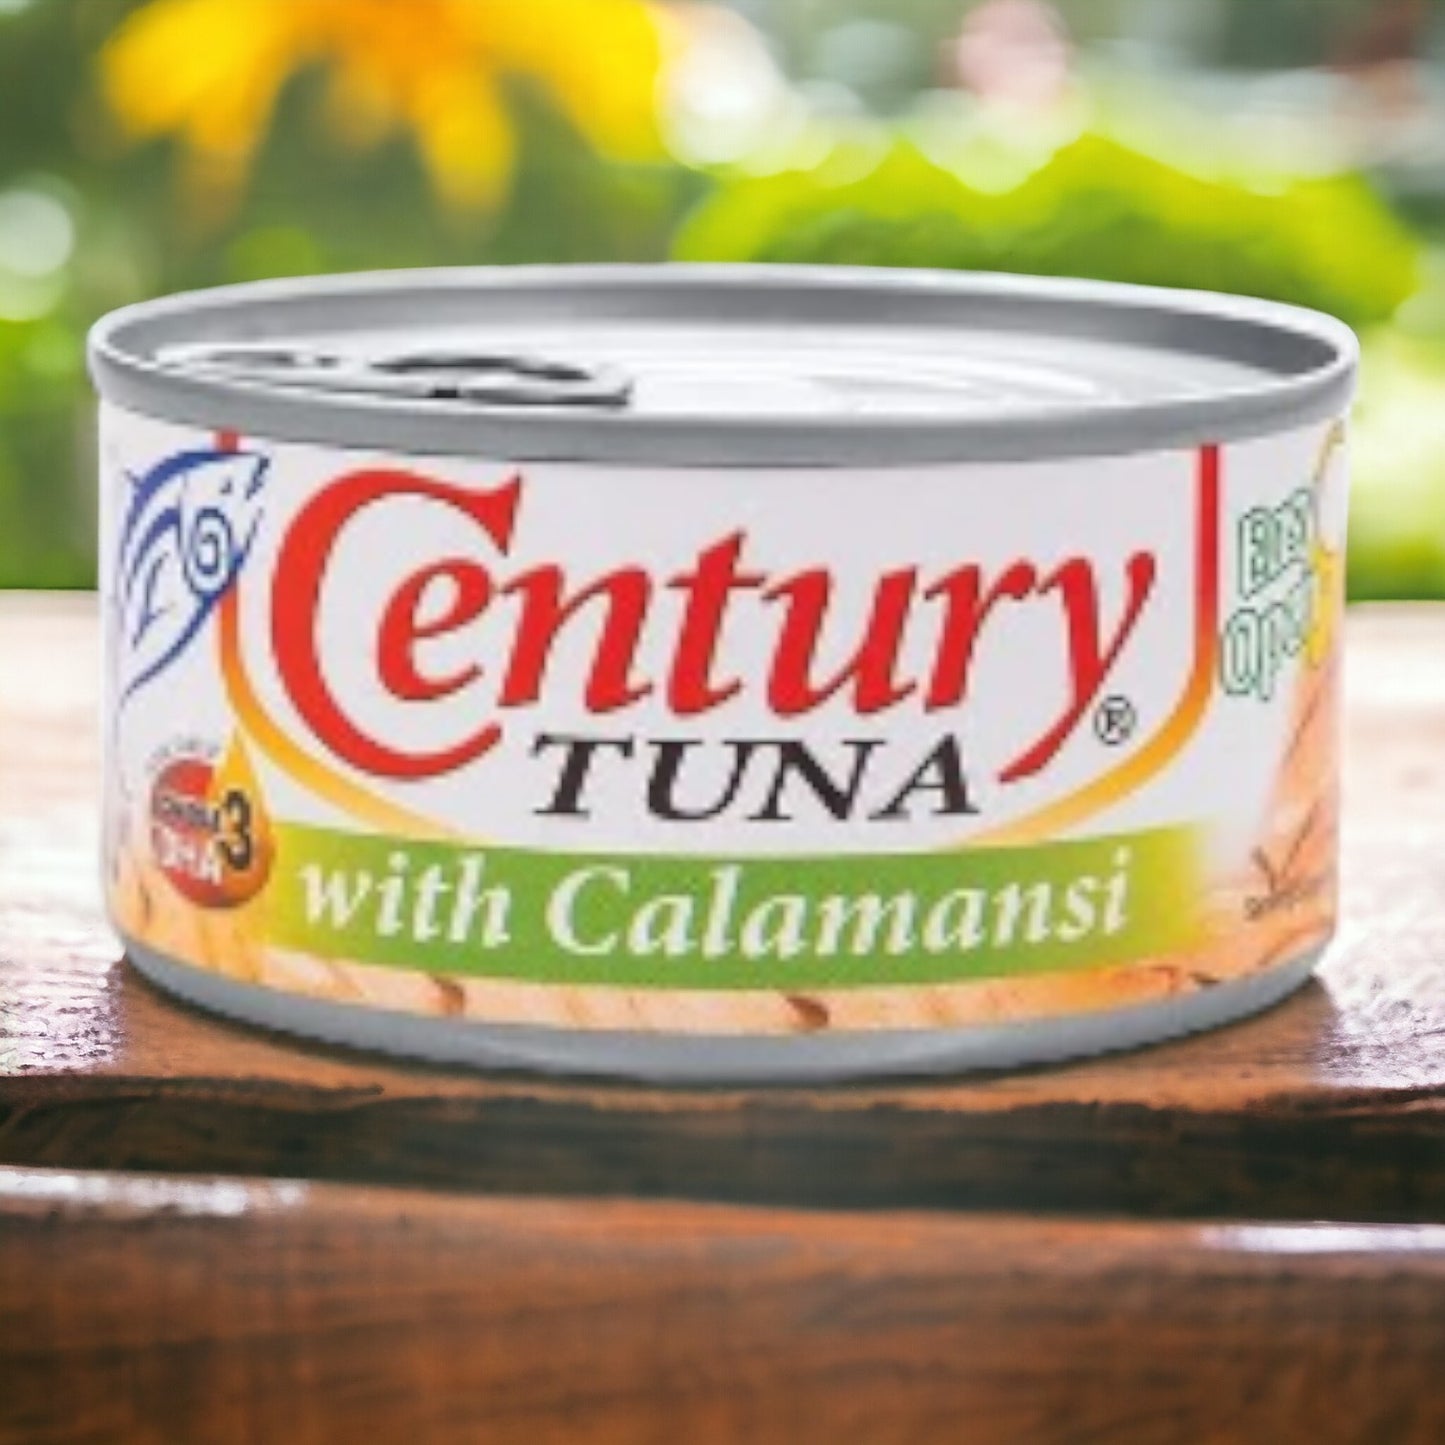 Century Tuna with Calamansi 180g